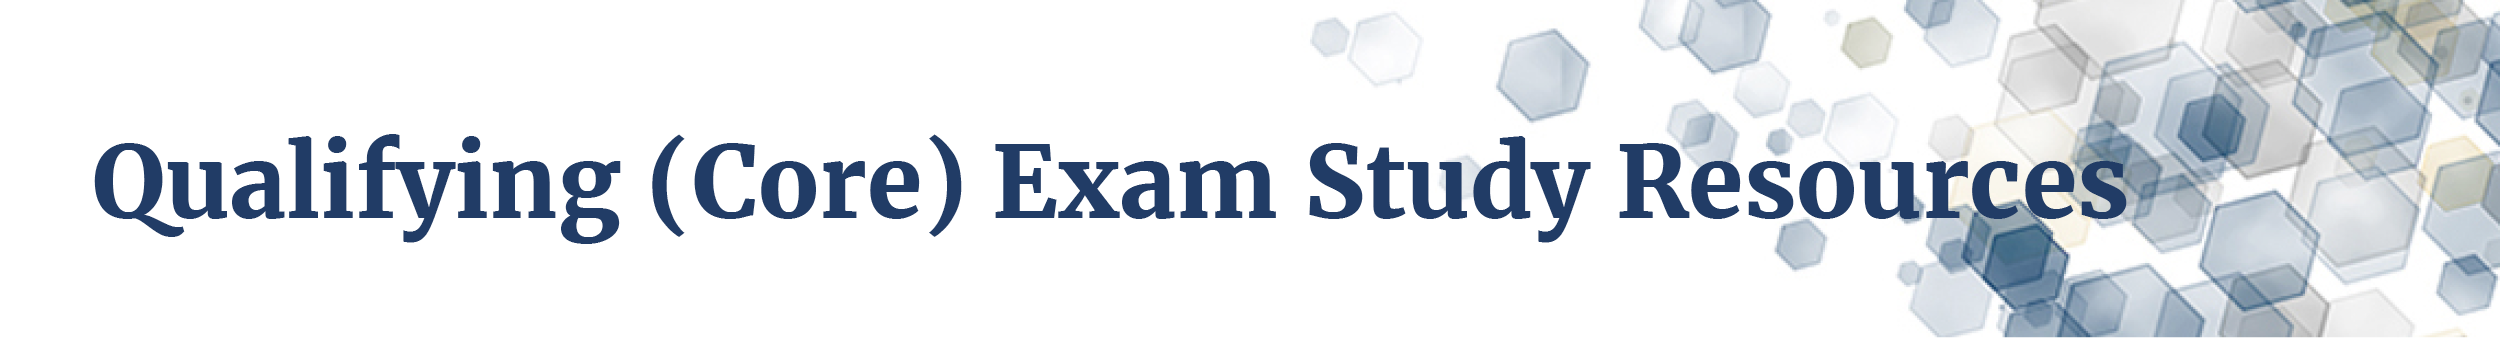 Qualifying (Core) Exam Study Resources header